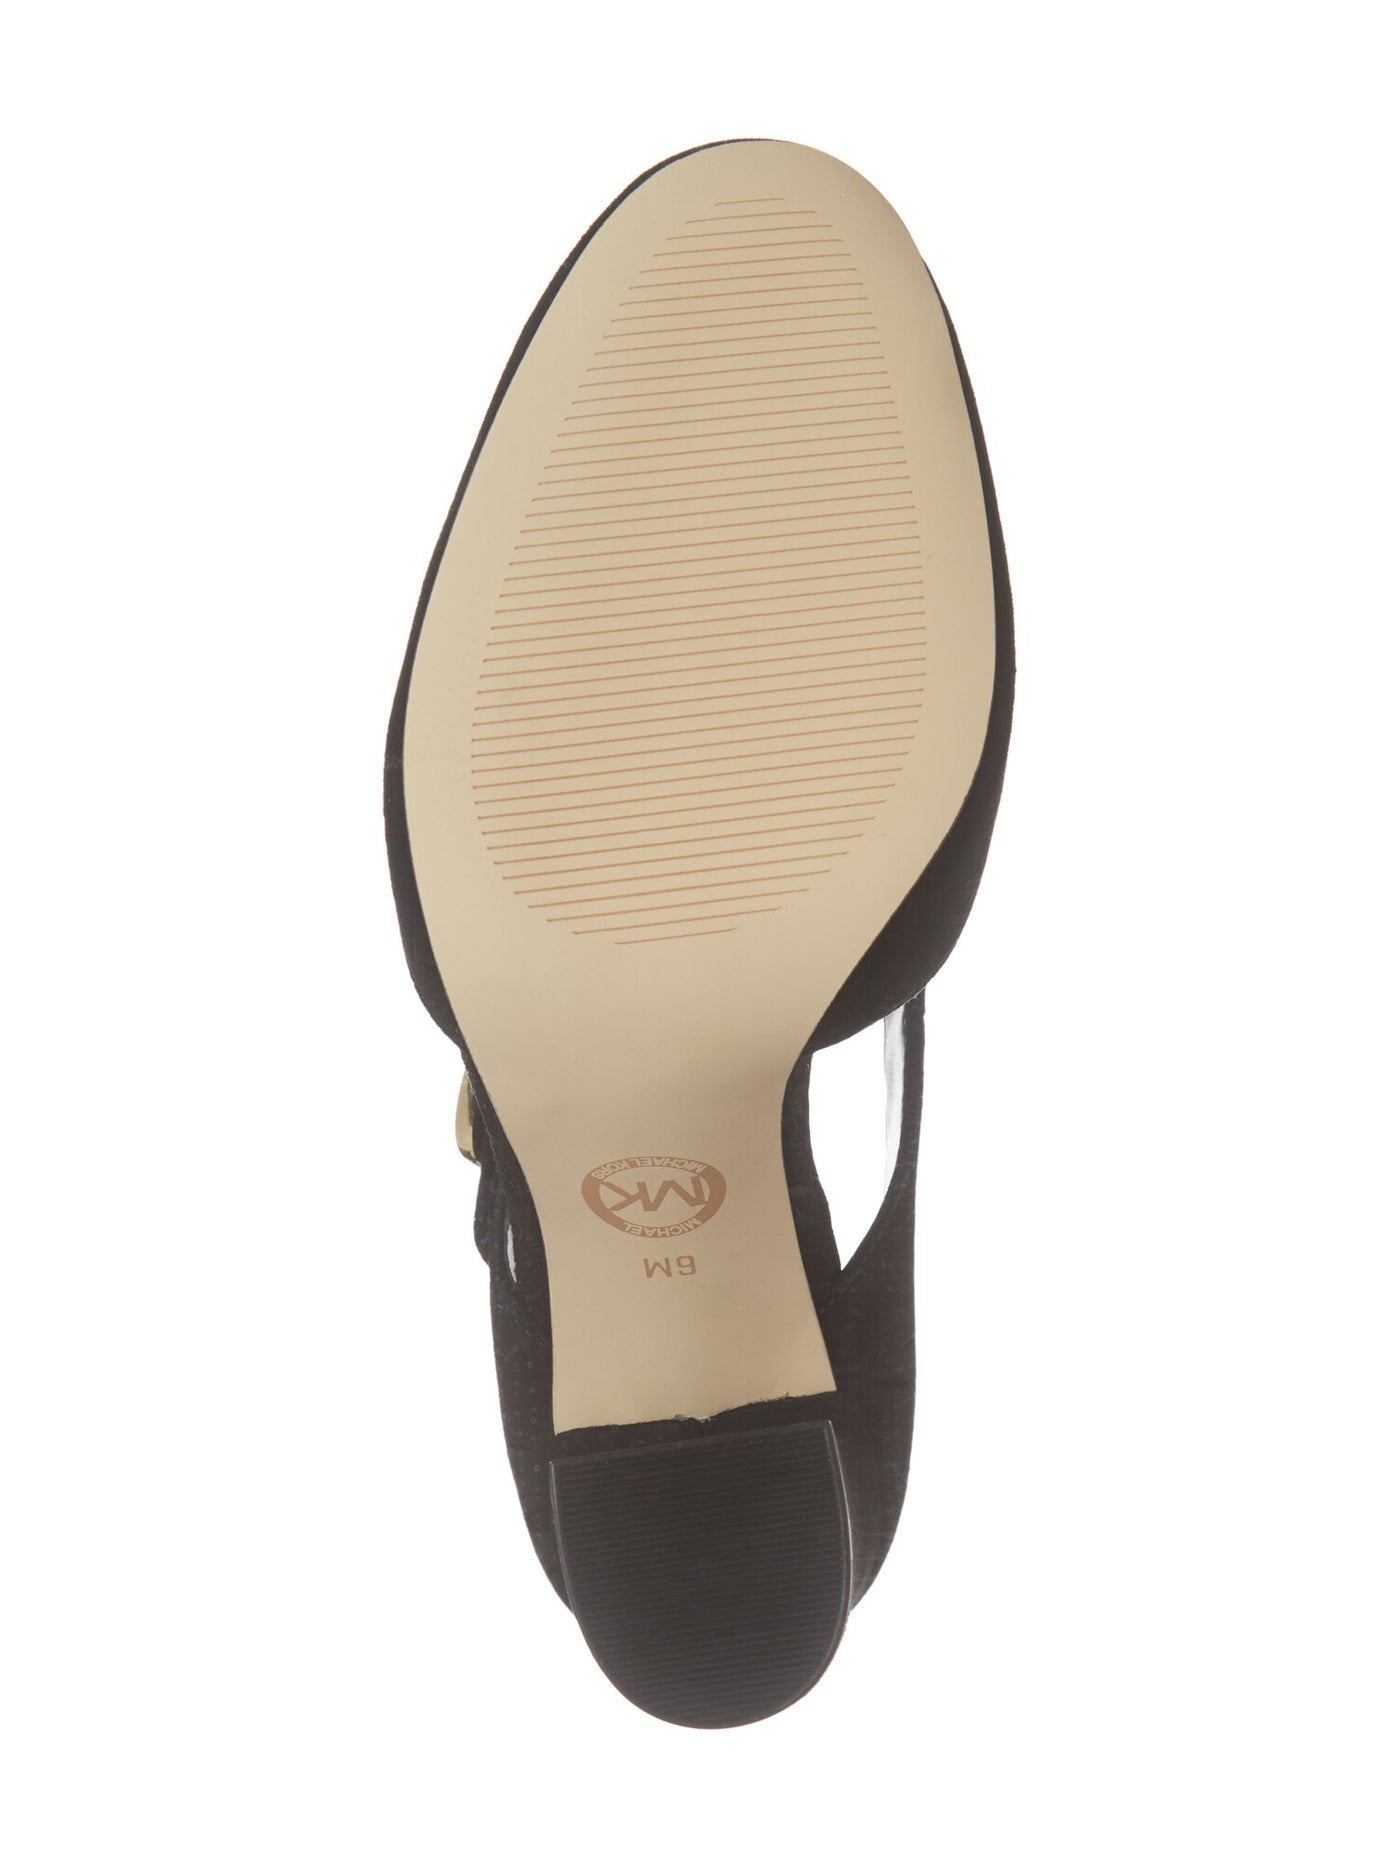 MICHAEL KORS Womens Black Padded Adjustable Alana Round Toe Block Heel Buckle Leather Pumps Shoes M